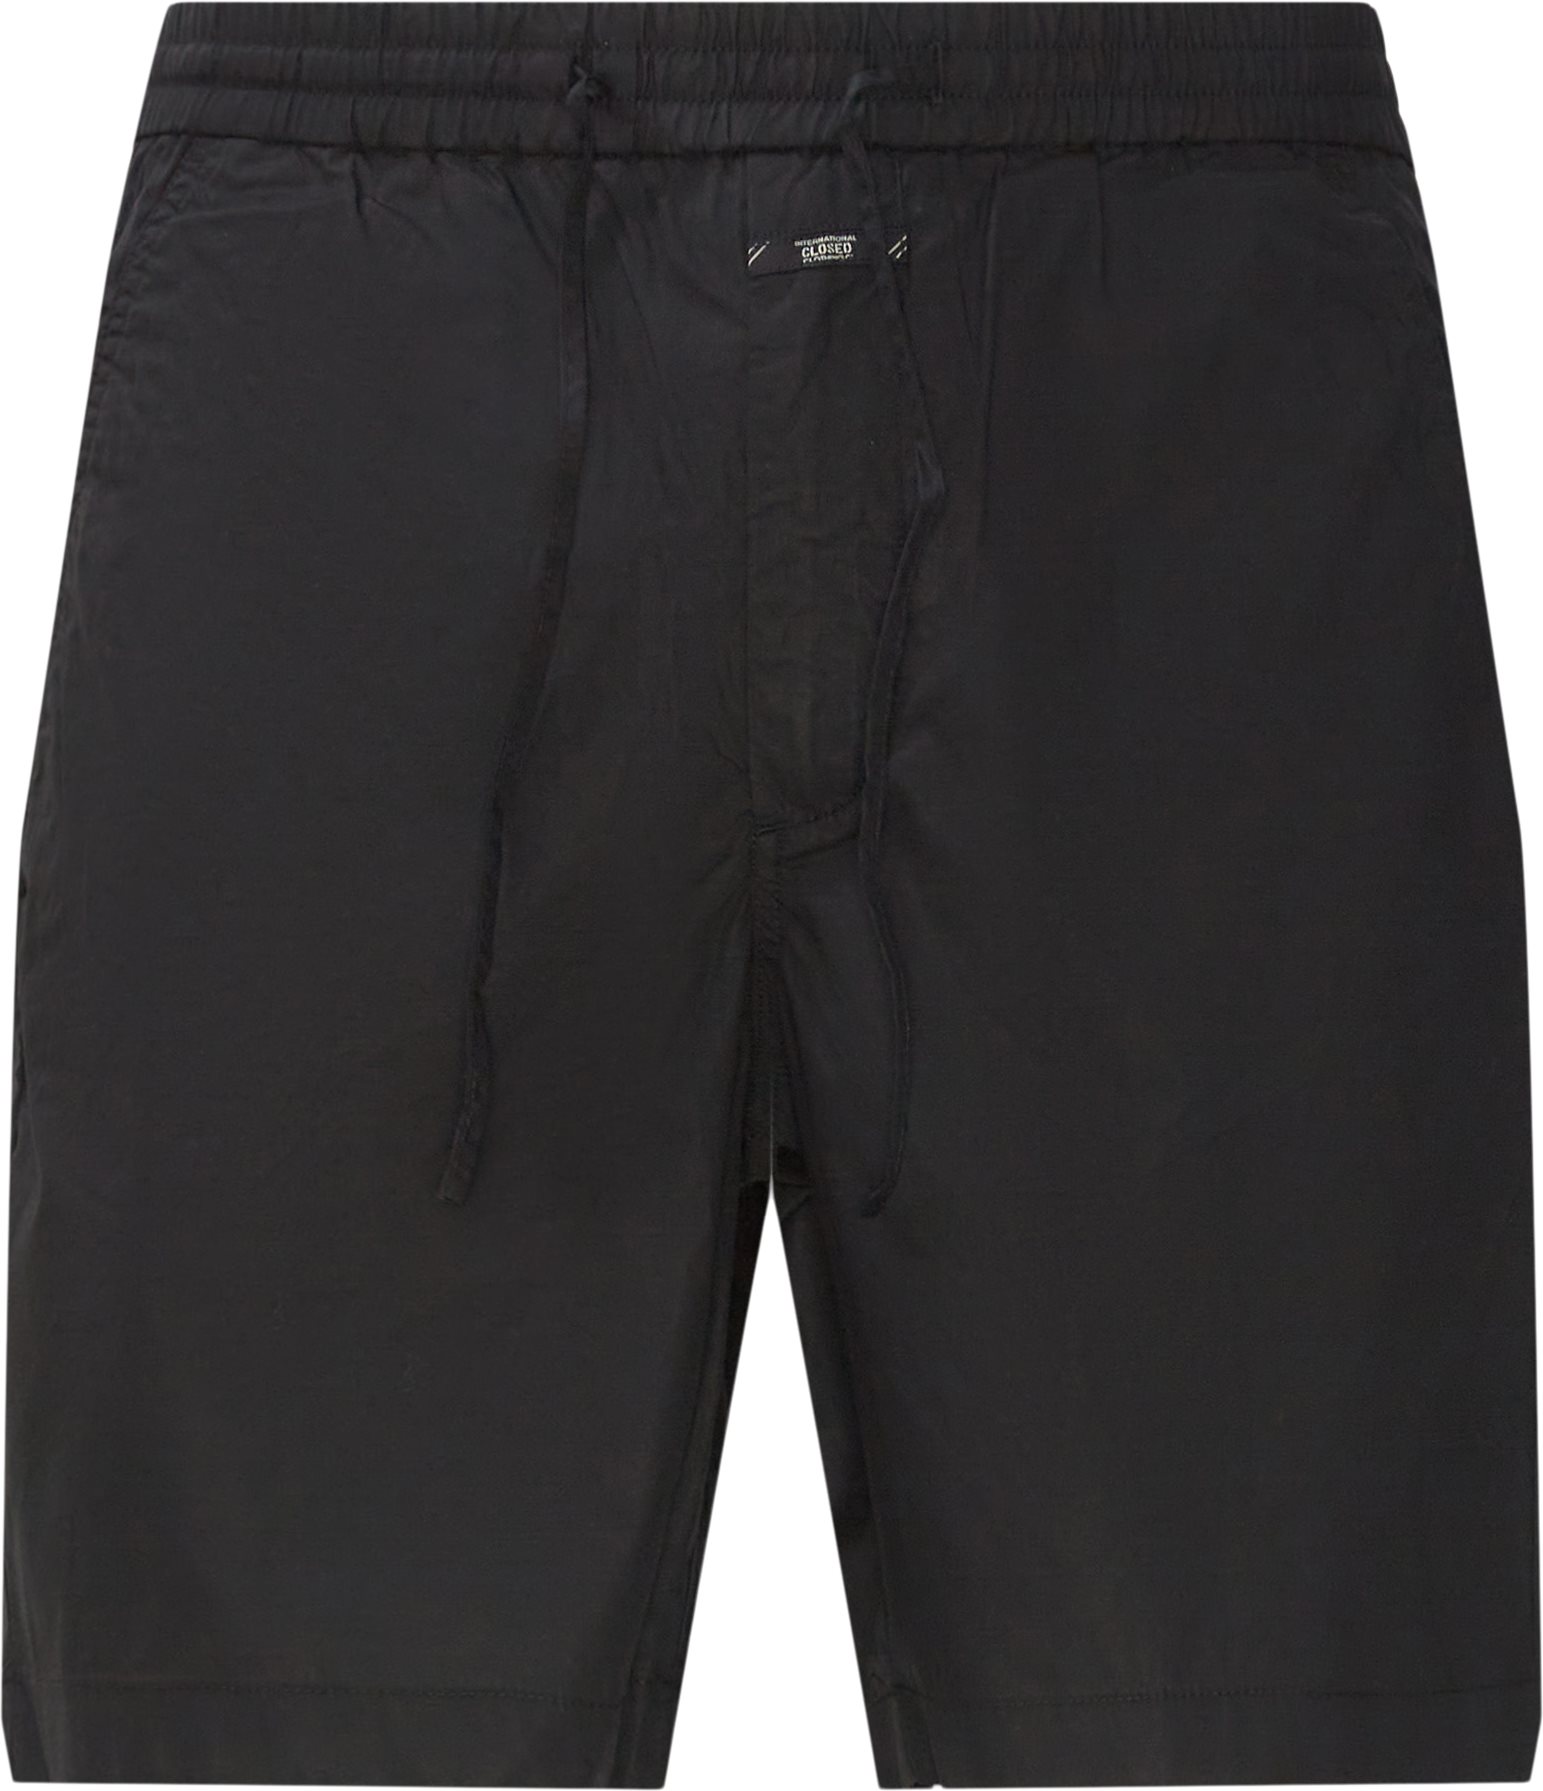 Shorts - Regular fit - Black